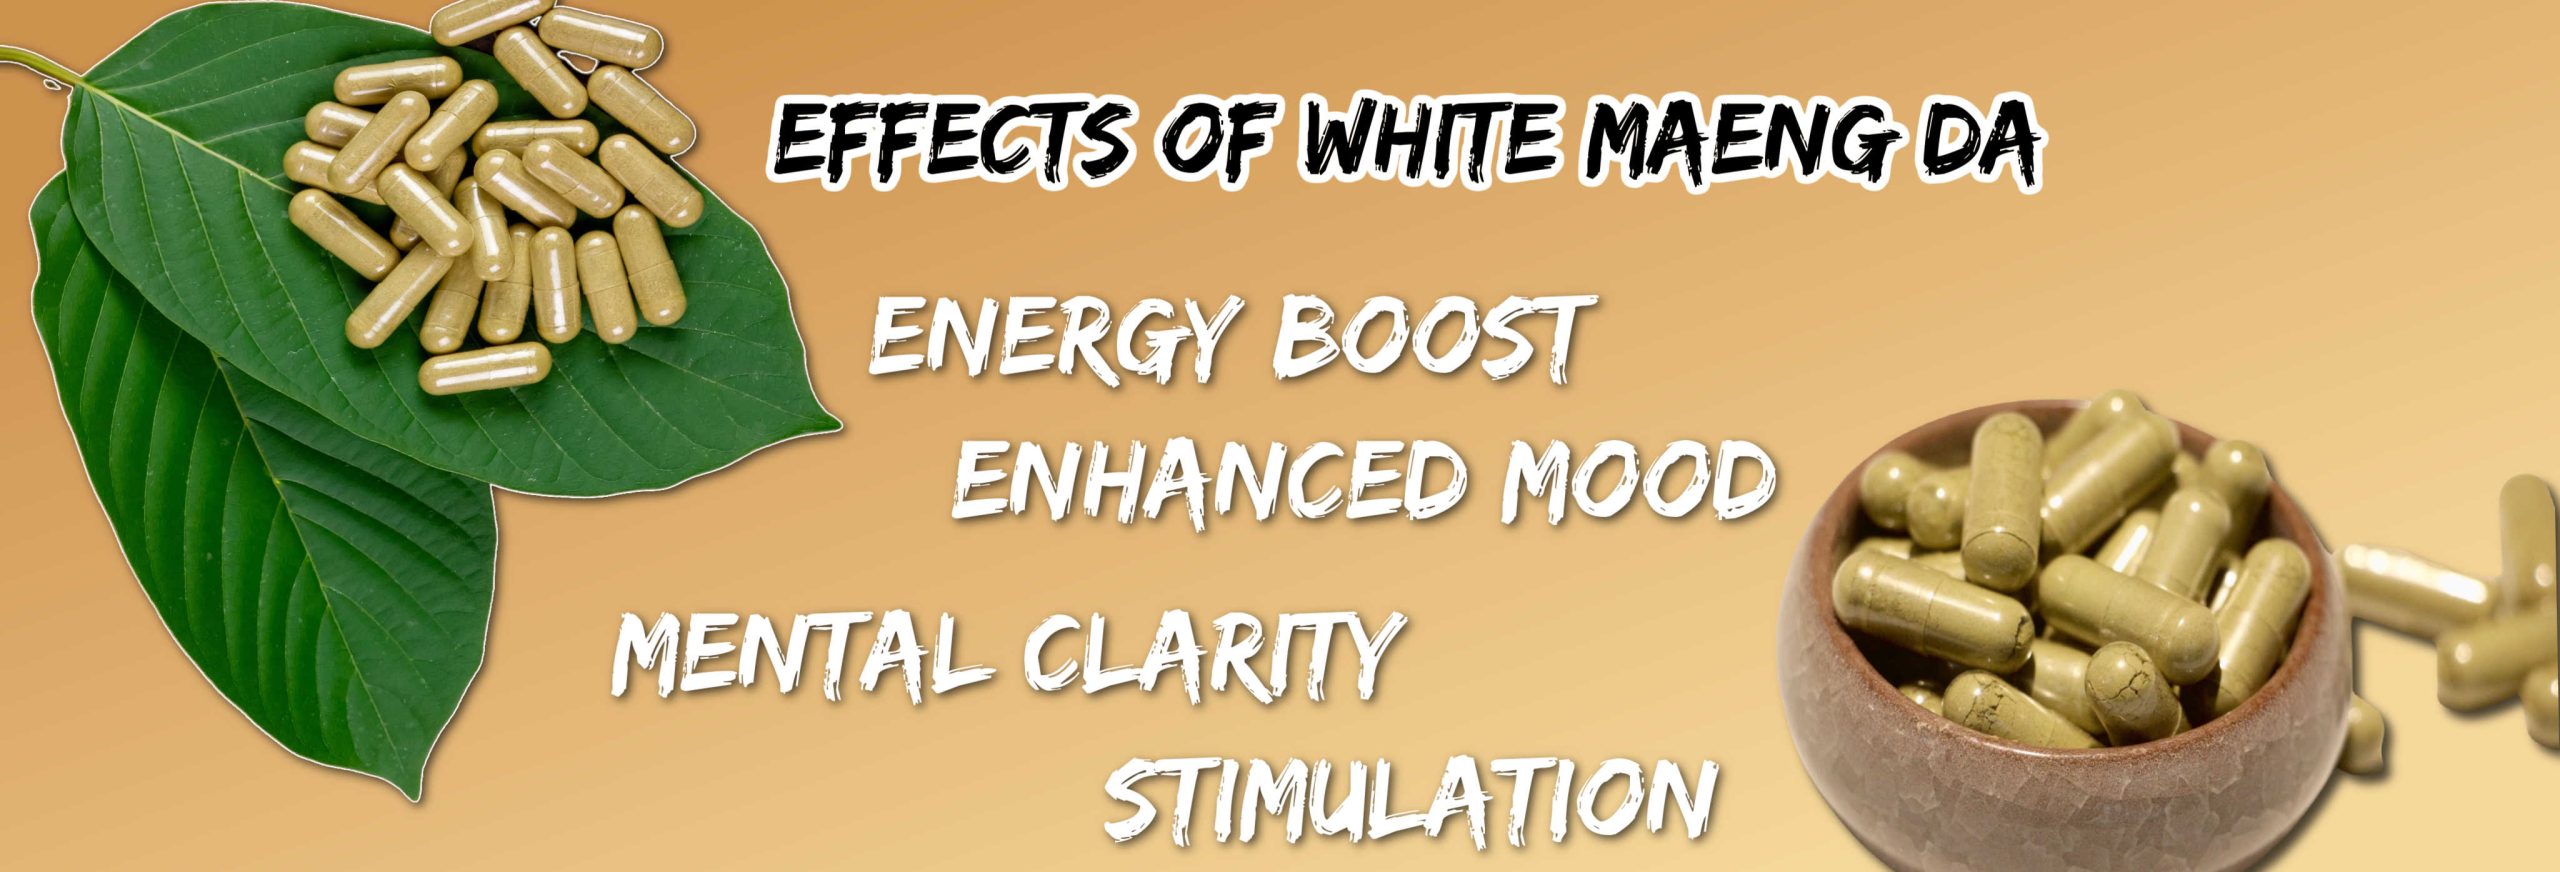 image of white maeng da effects